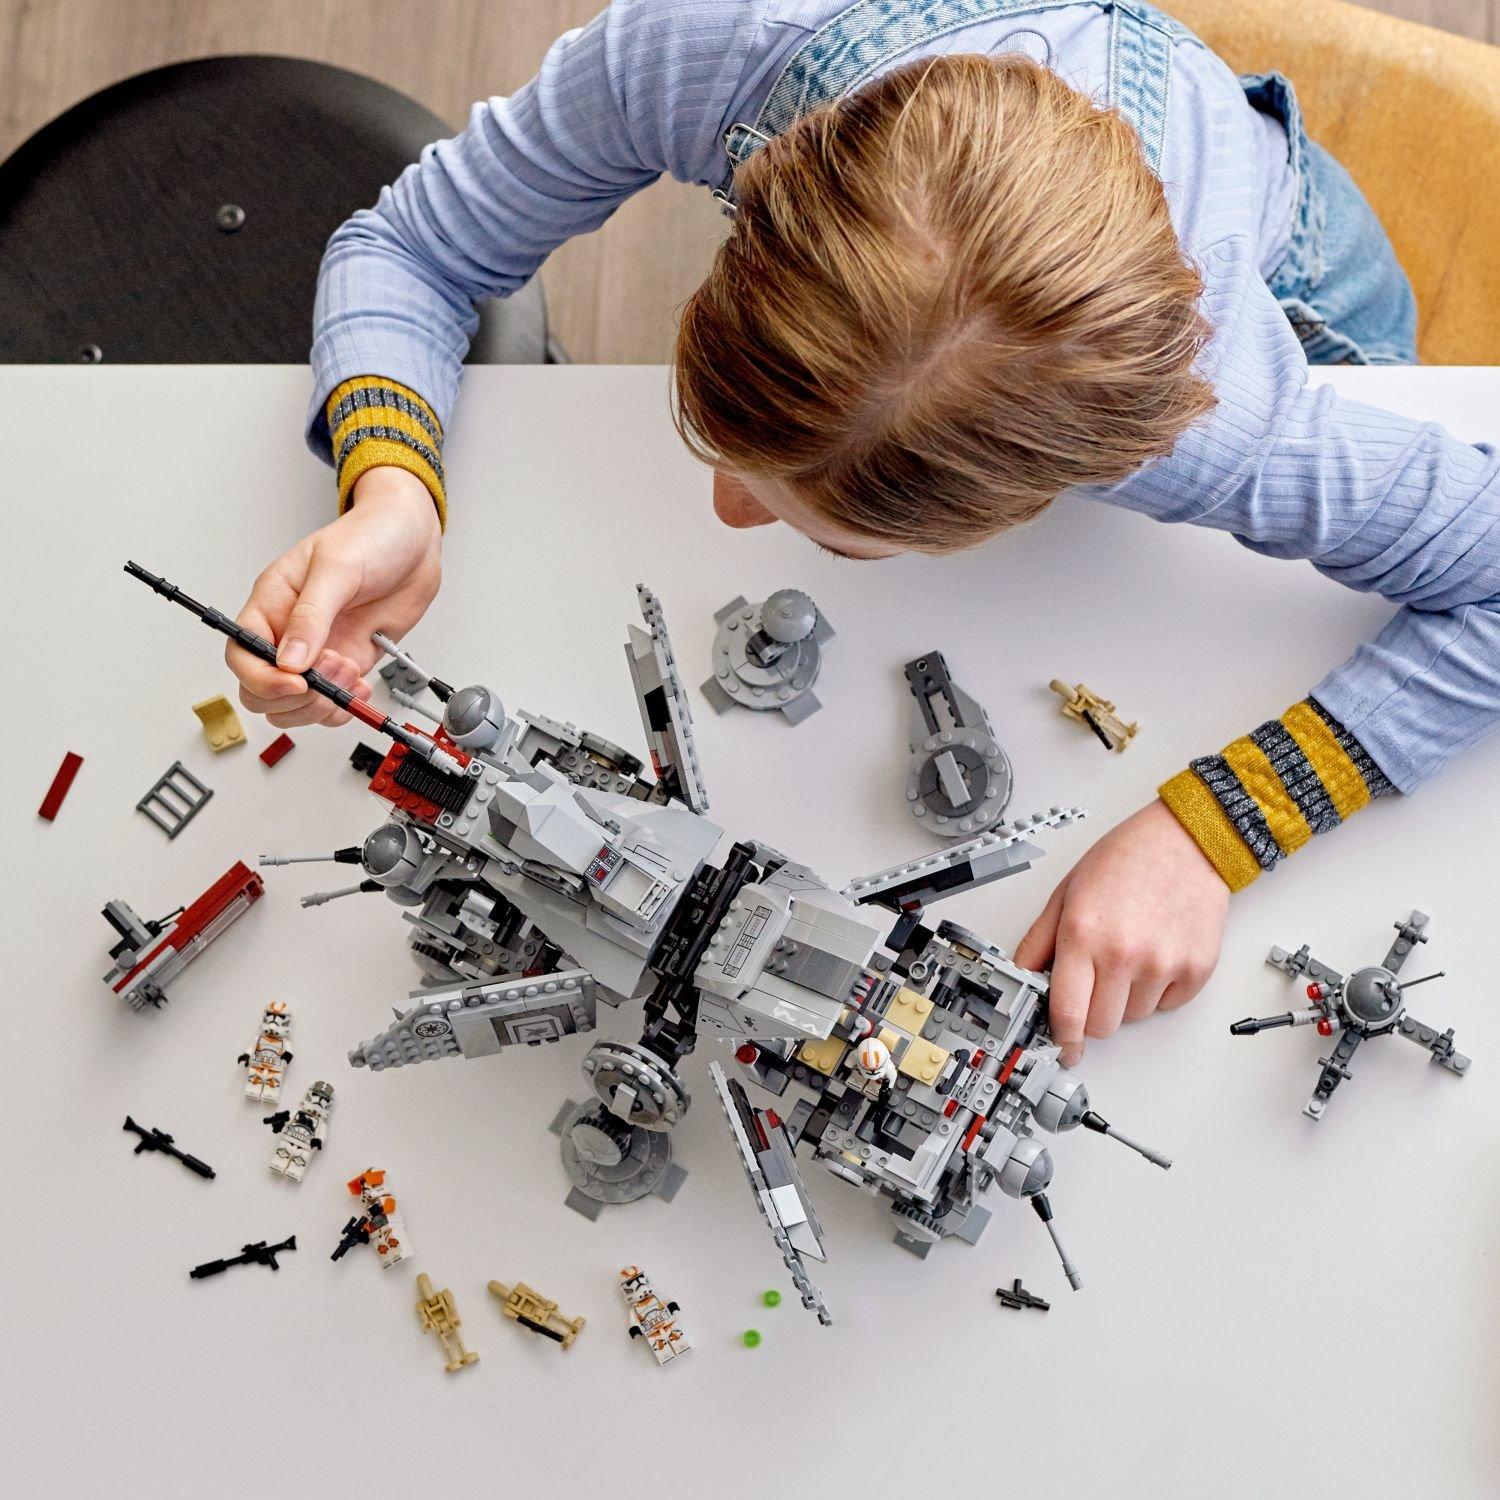 LEGO Star Wars AT-TE Walker 75337 Building Kit